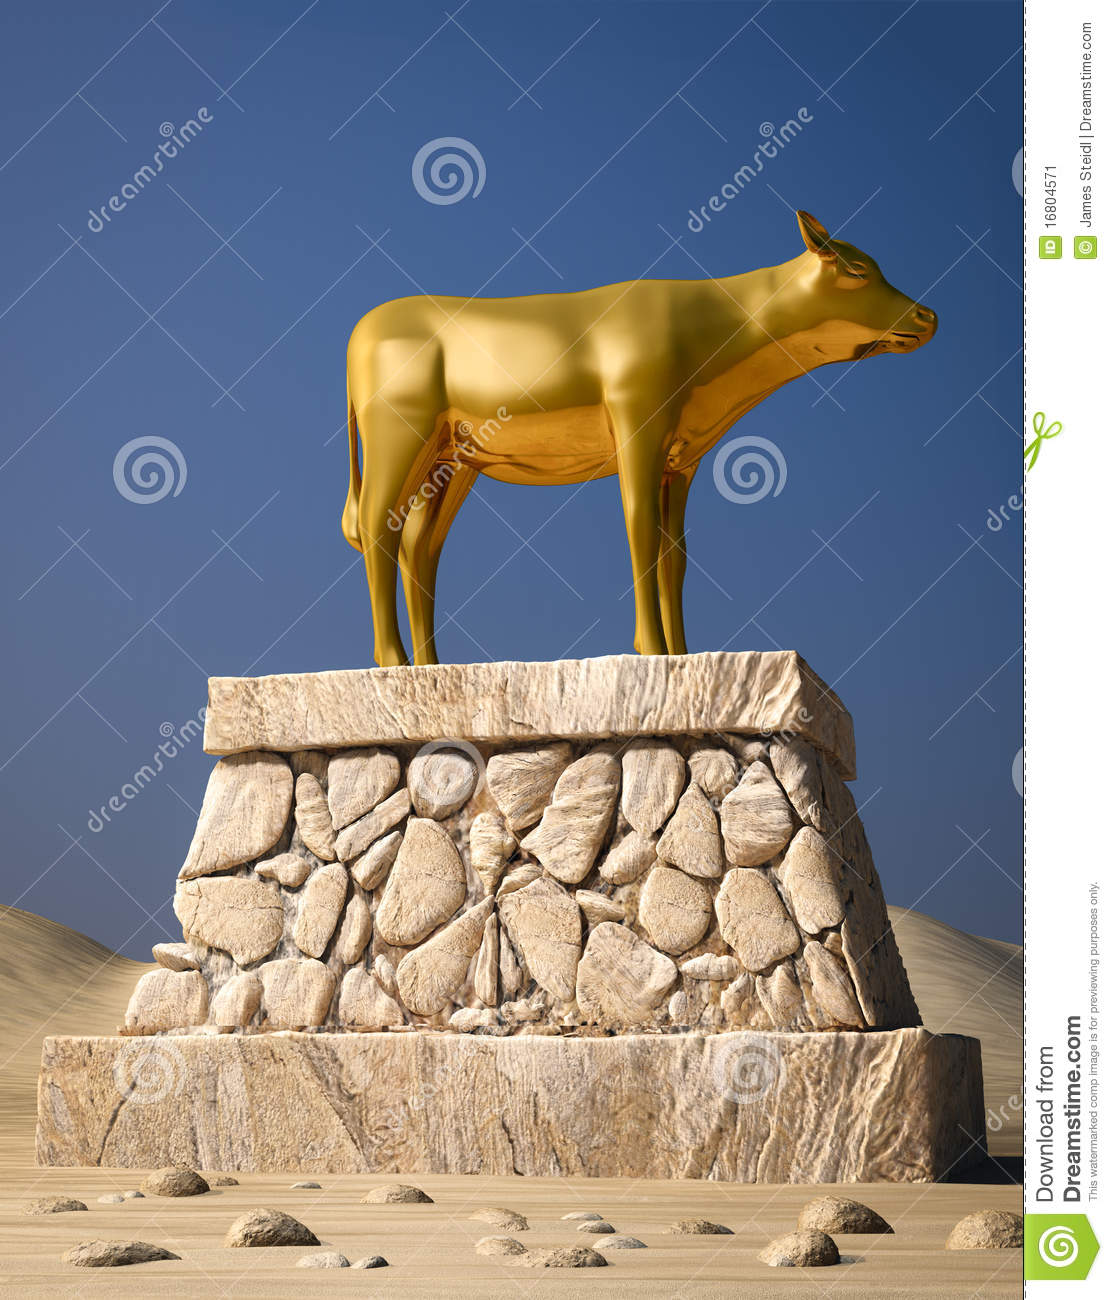 Golden Calf Stock Image   Image  16804571